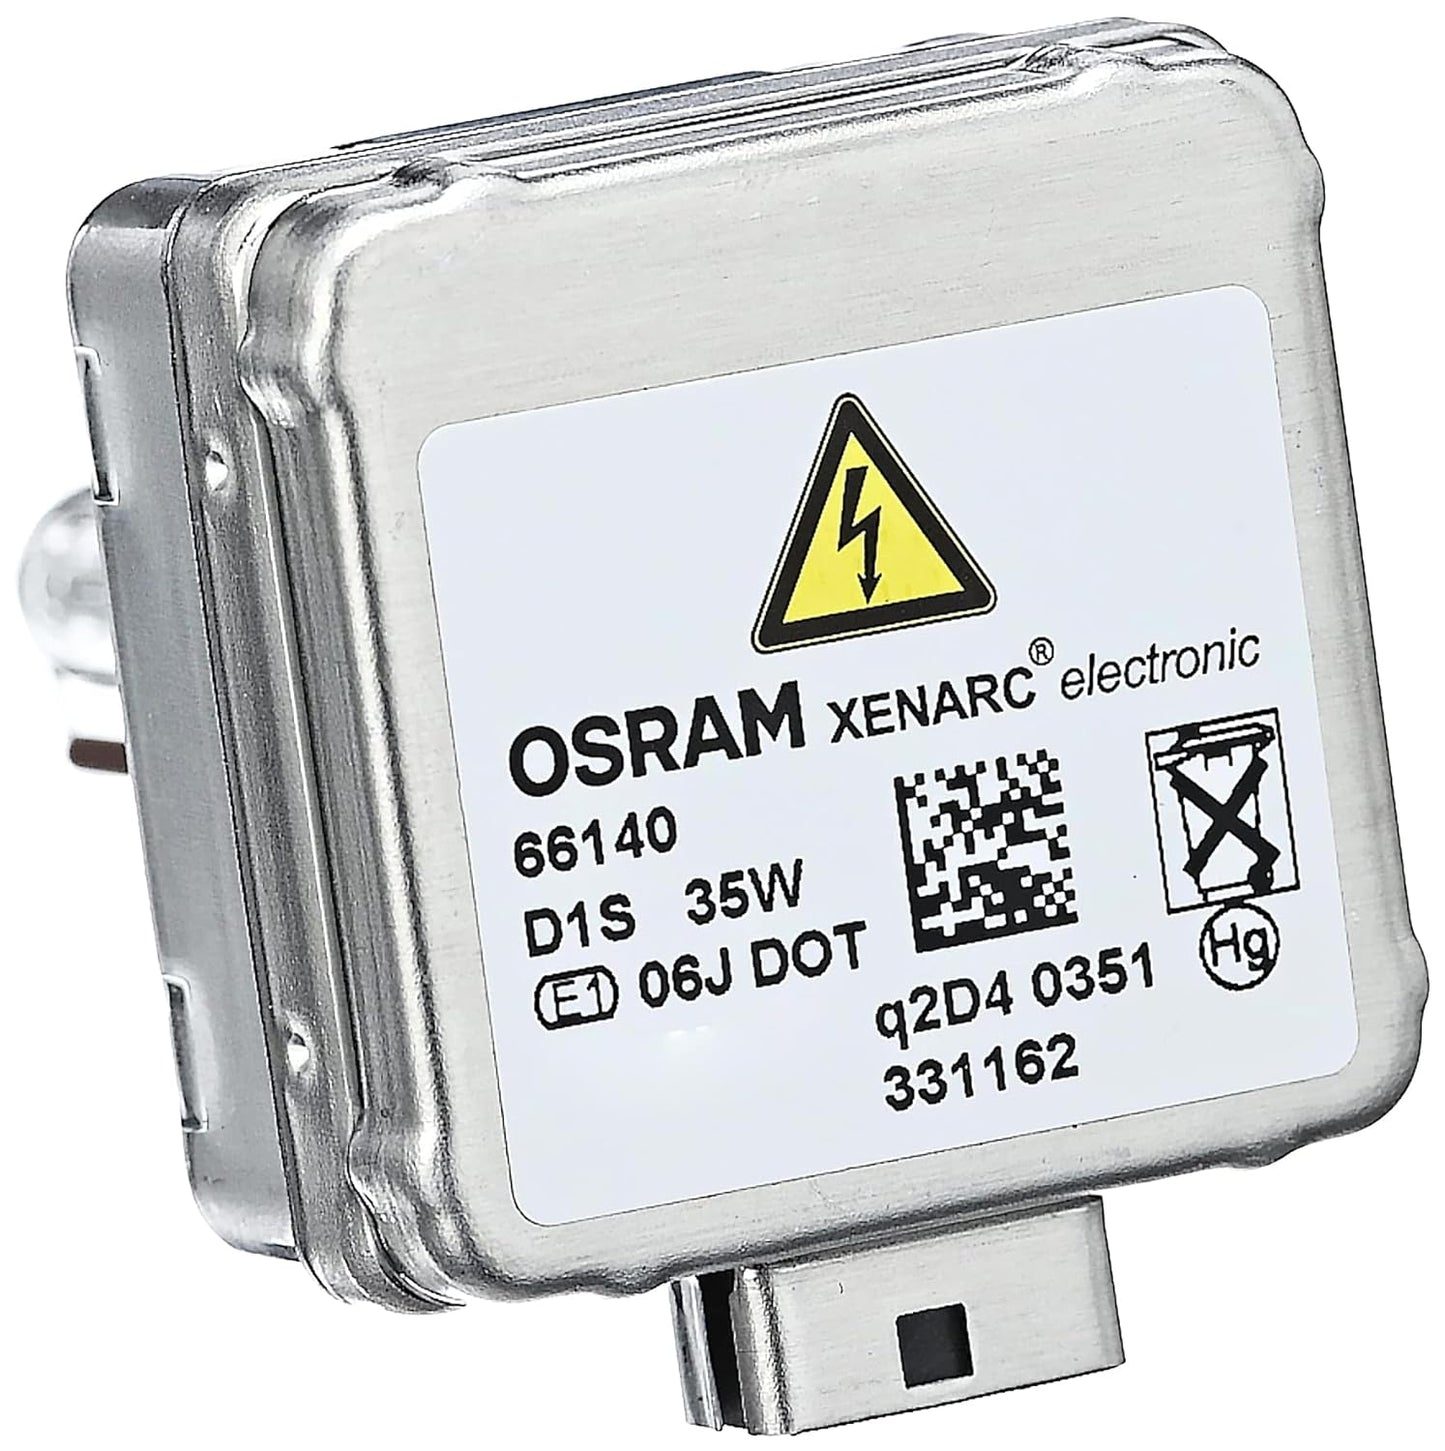 OSRAM D Series XENARC ORIGINAL 35W Auto Halogen Bulbs/Lamps 4150K-4300K